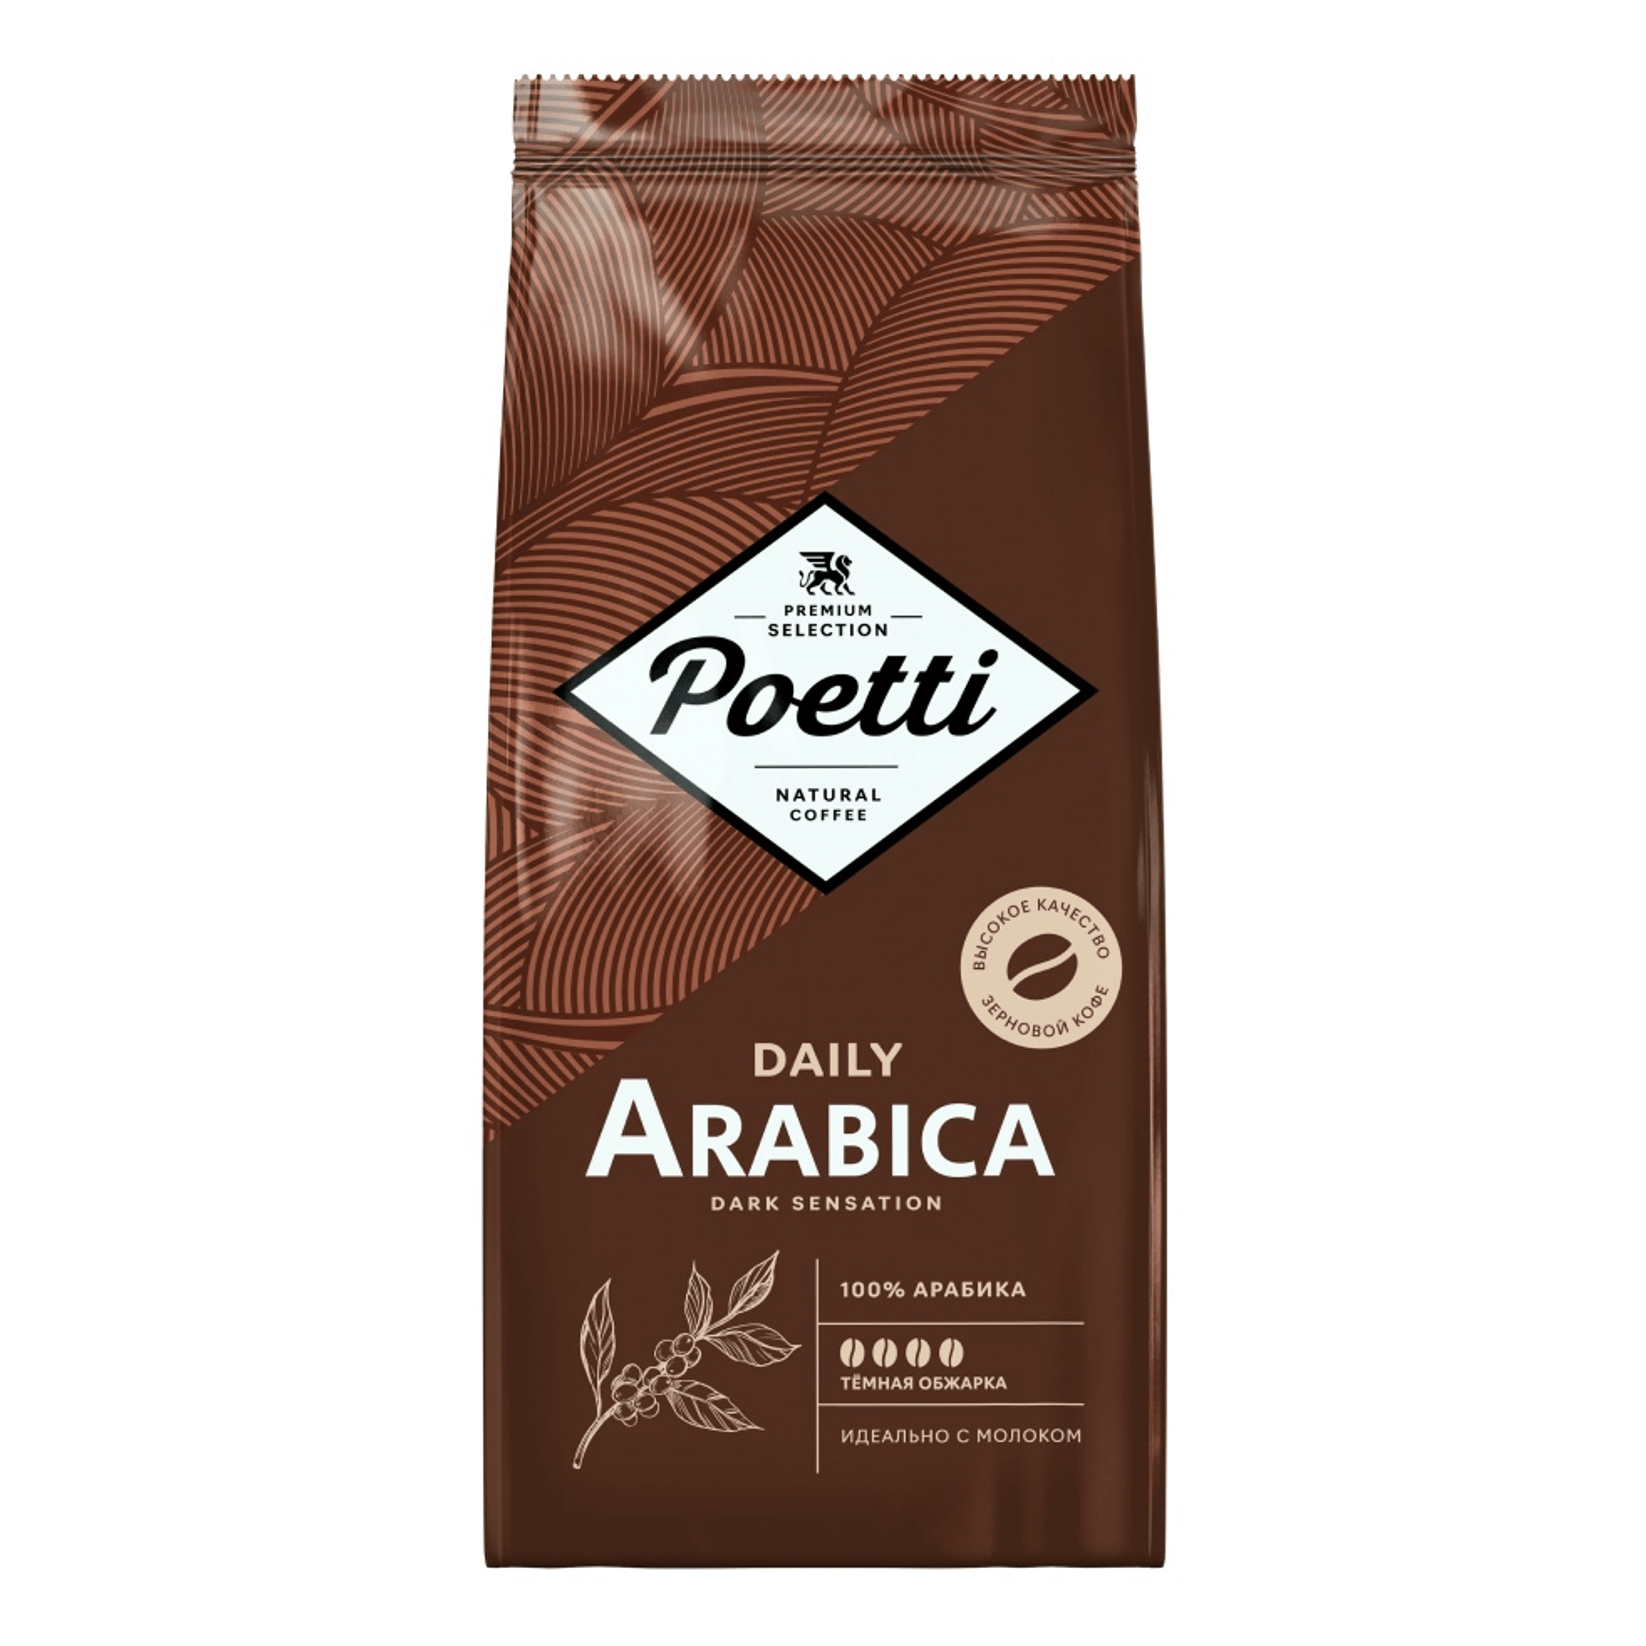 Кофе в зернах Poetti Daily Arabica Dark Sensation 750 г кофе в зёрнах poetti daily arabica 1 кг